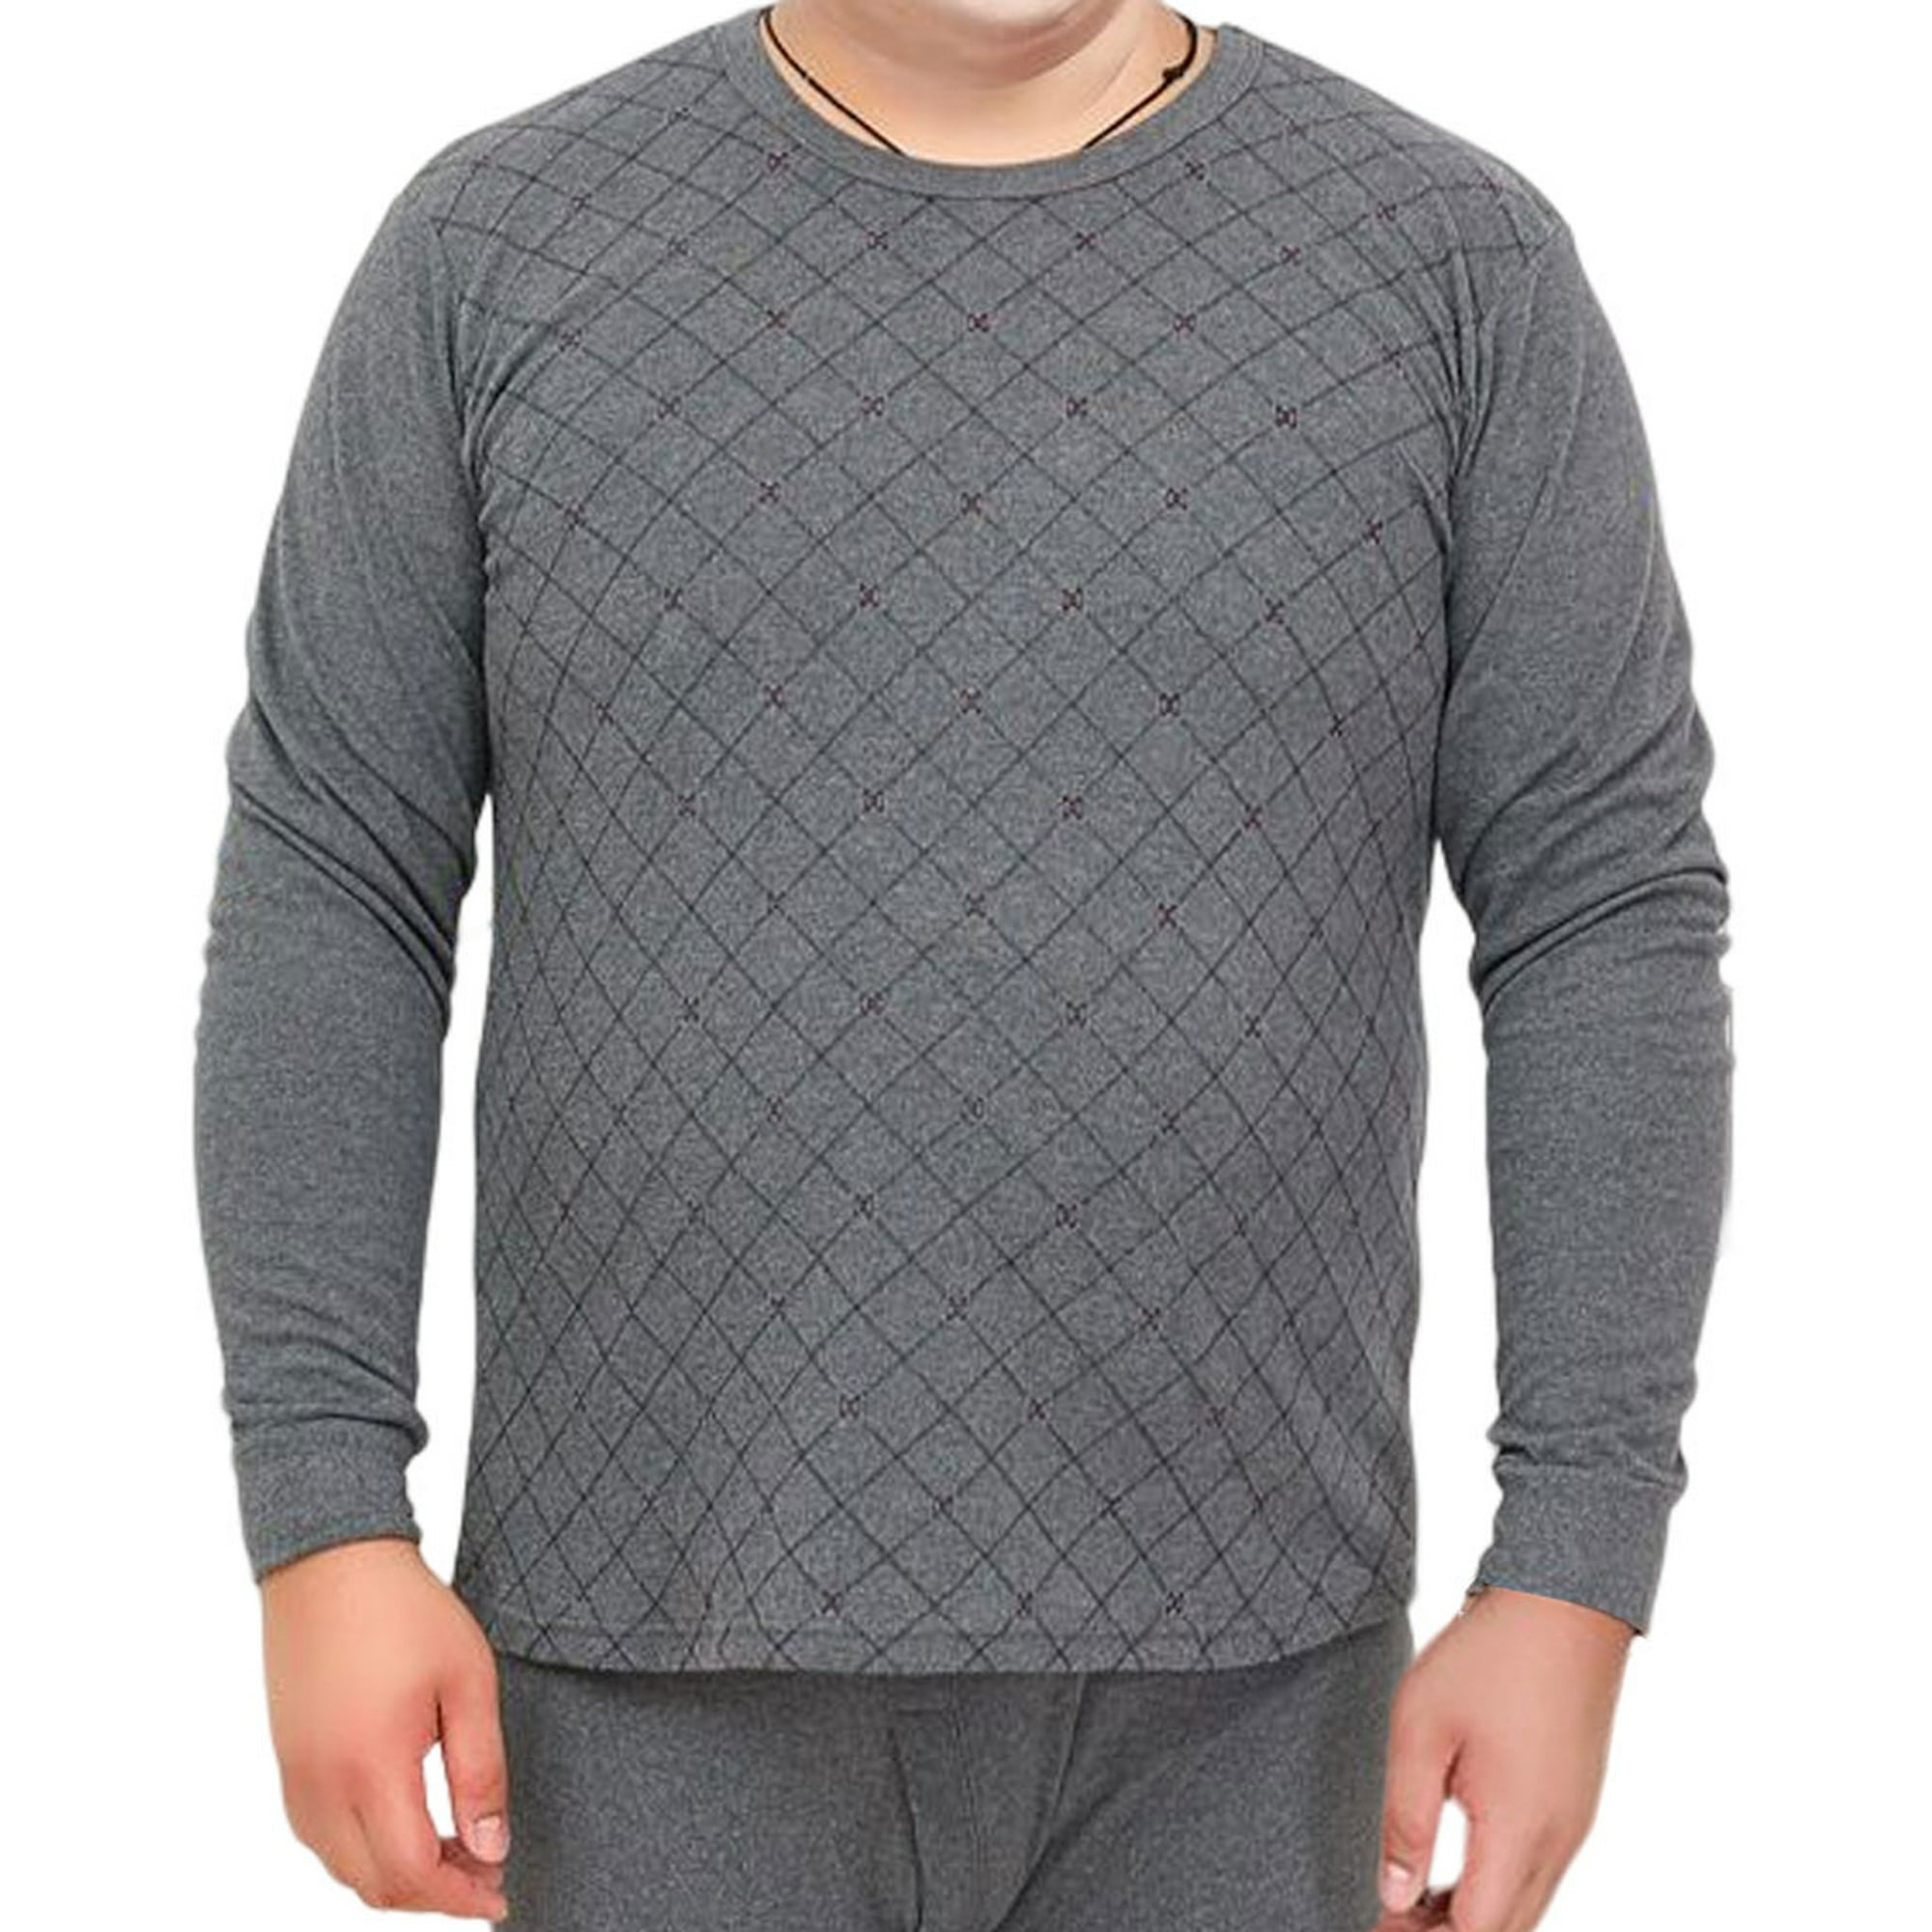 Camisetas de cuello alto falso de moda para hombre, suéter de manga larga,  diseño básico, camiseta interior ajustada